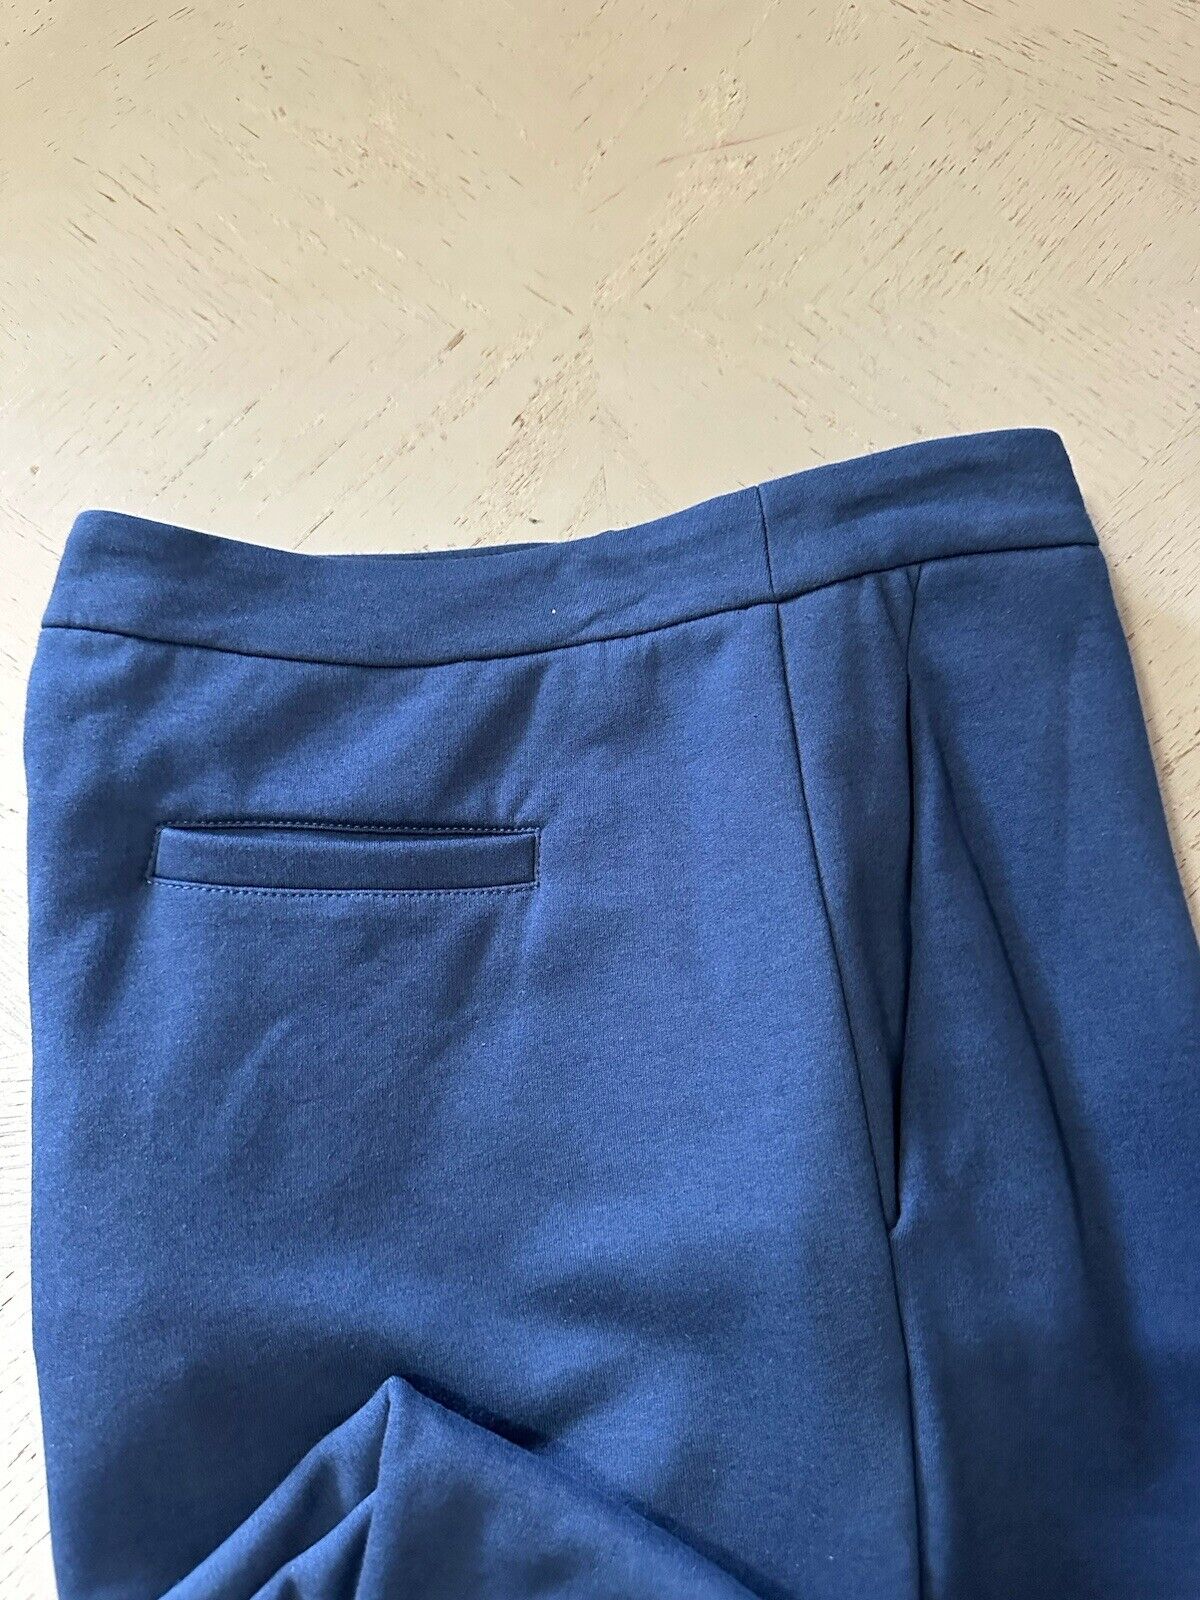 NWT $1495 Giorgio Armani Mens Sweatpants Jogging Pants Blue 34 US/50 Eu Italy